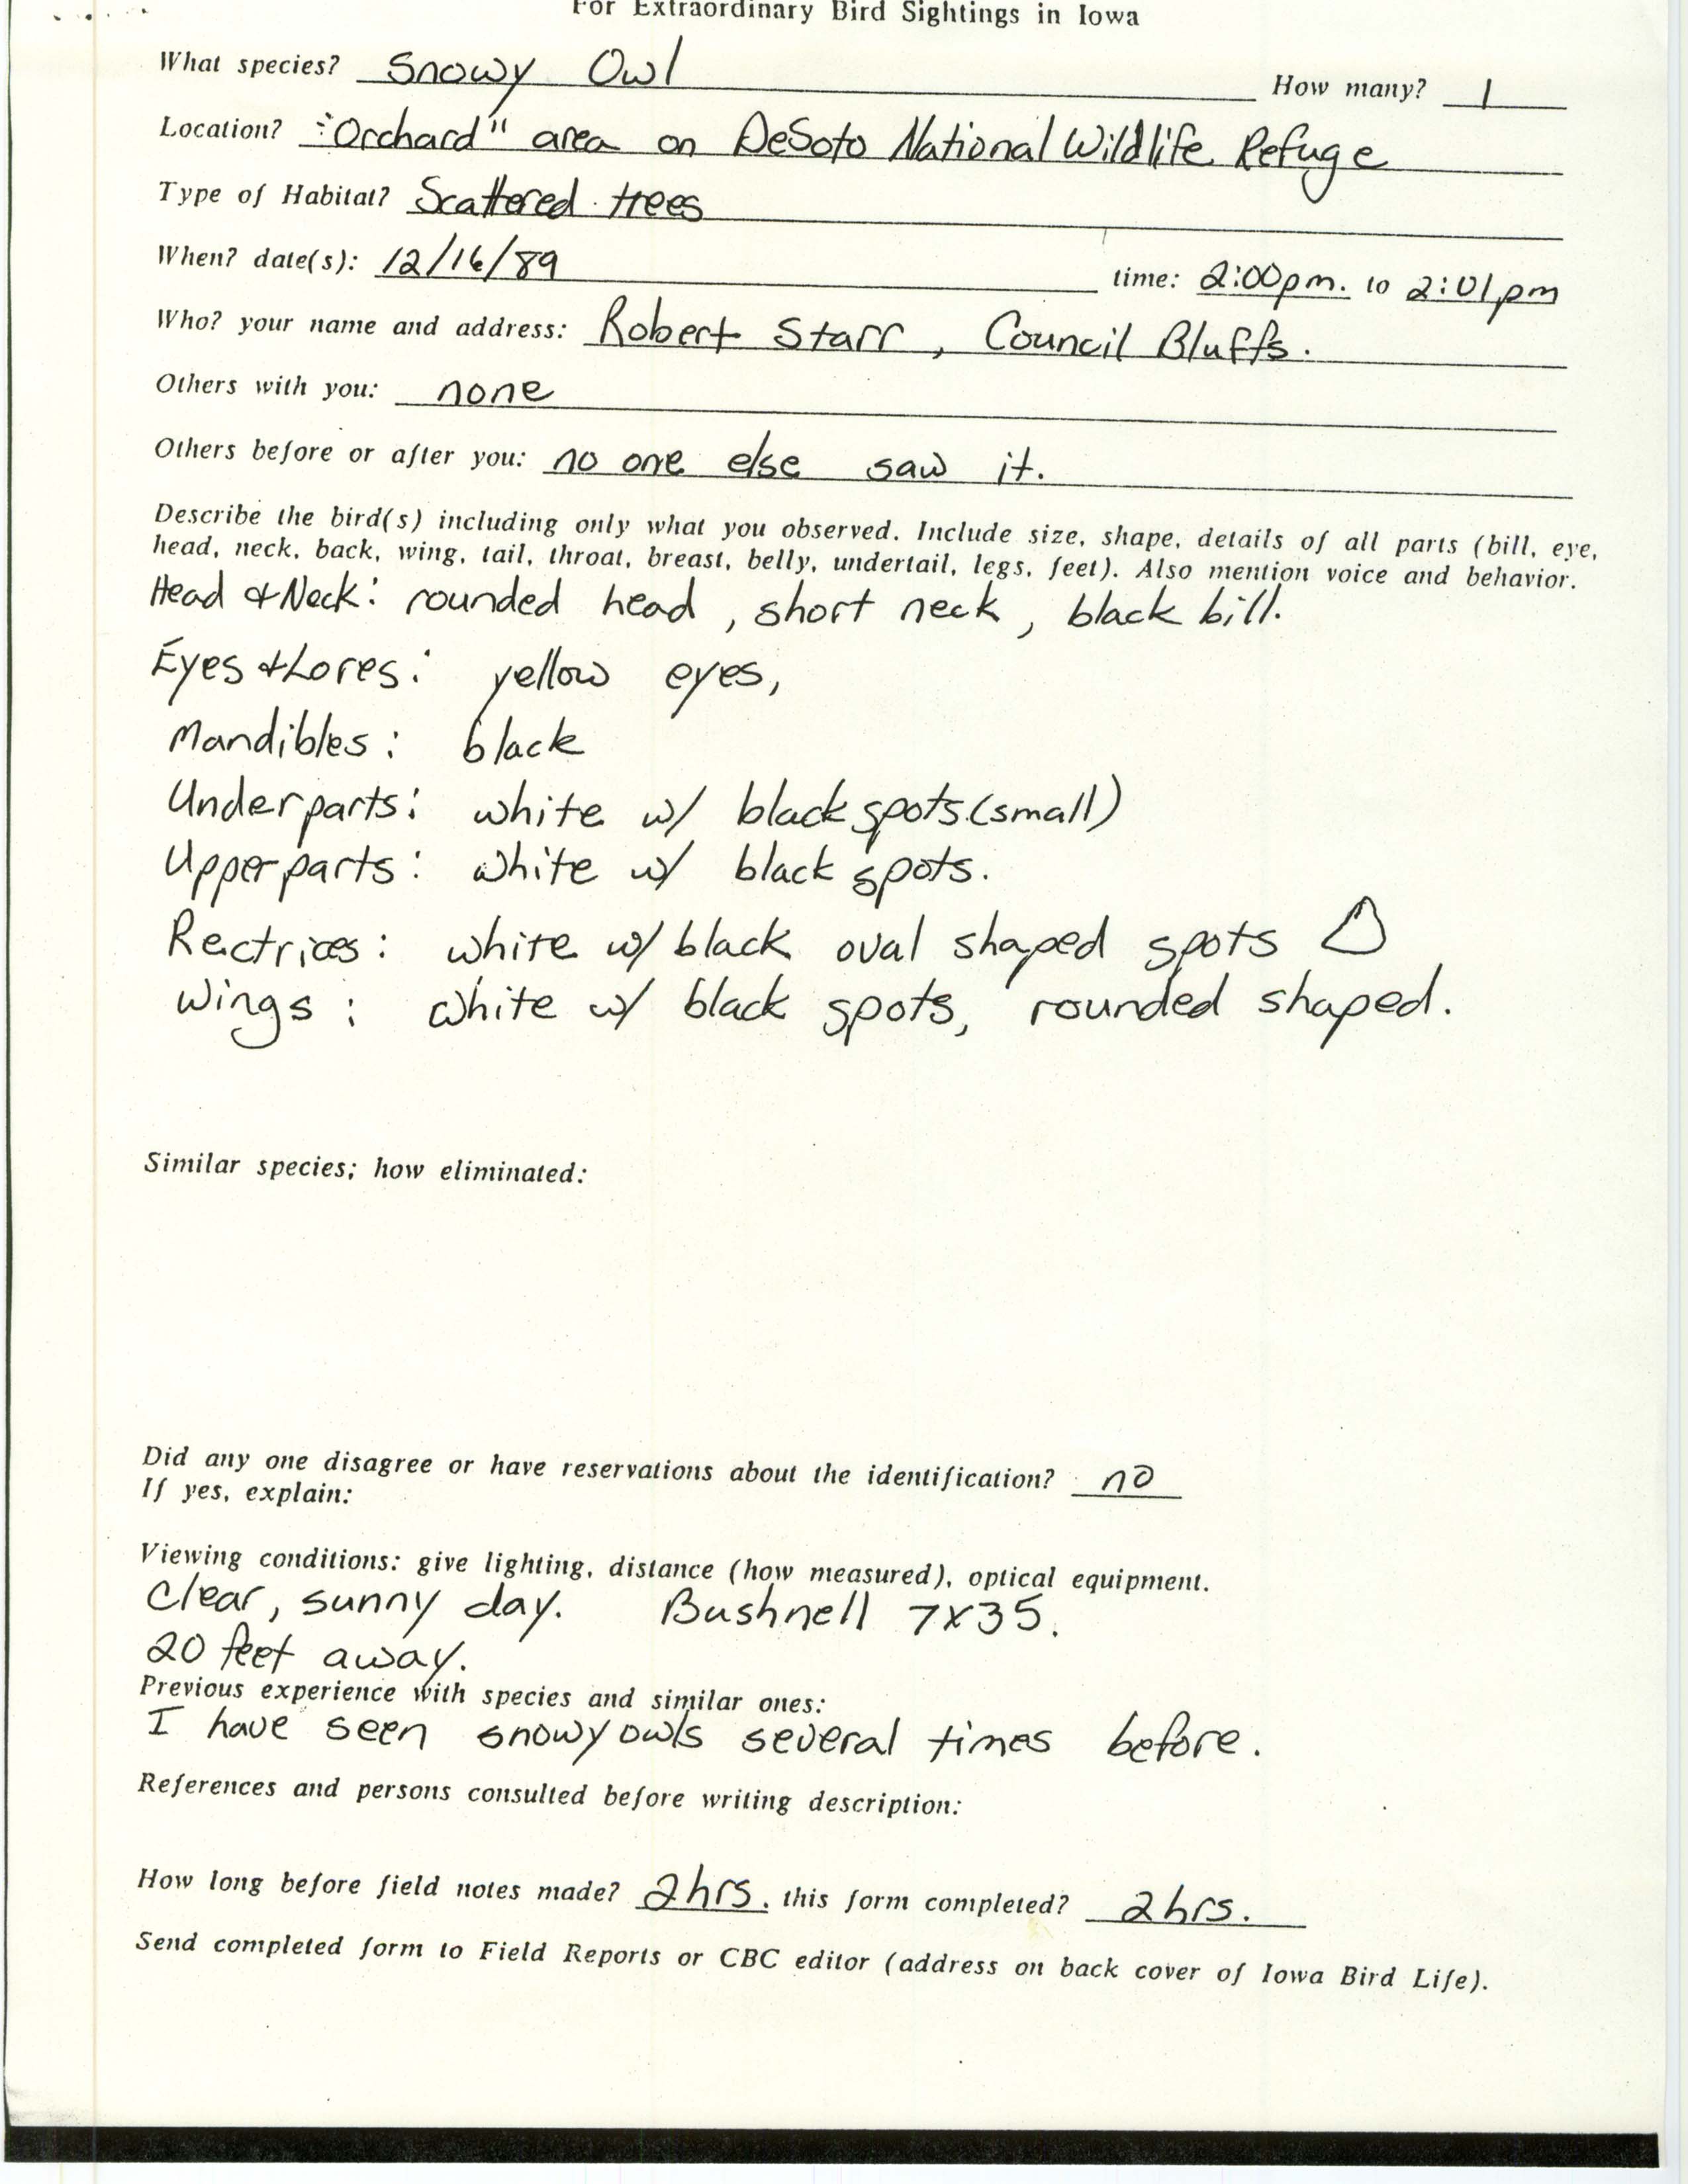 Rare bird documentation form for Snowy Owl at DeSoto National Wildlife Refuge, 1989